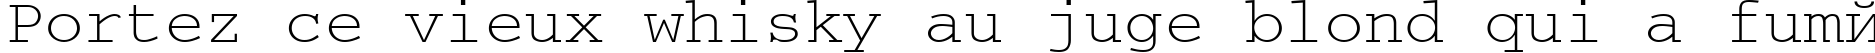 Пример написания шрифтом UkrainianCourier текста на французском